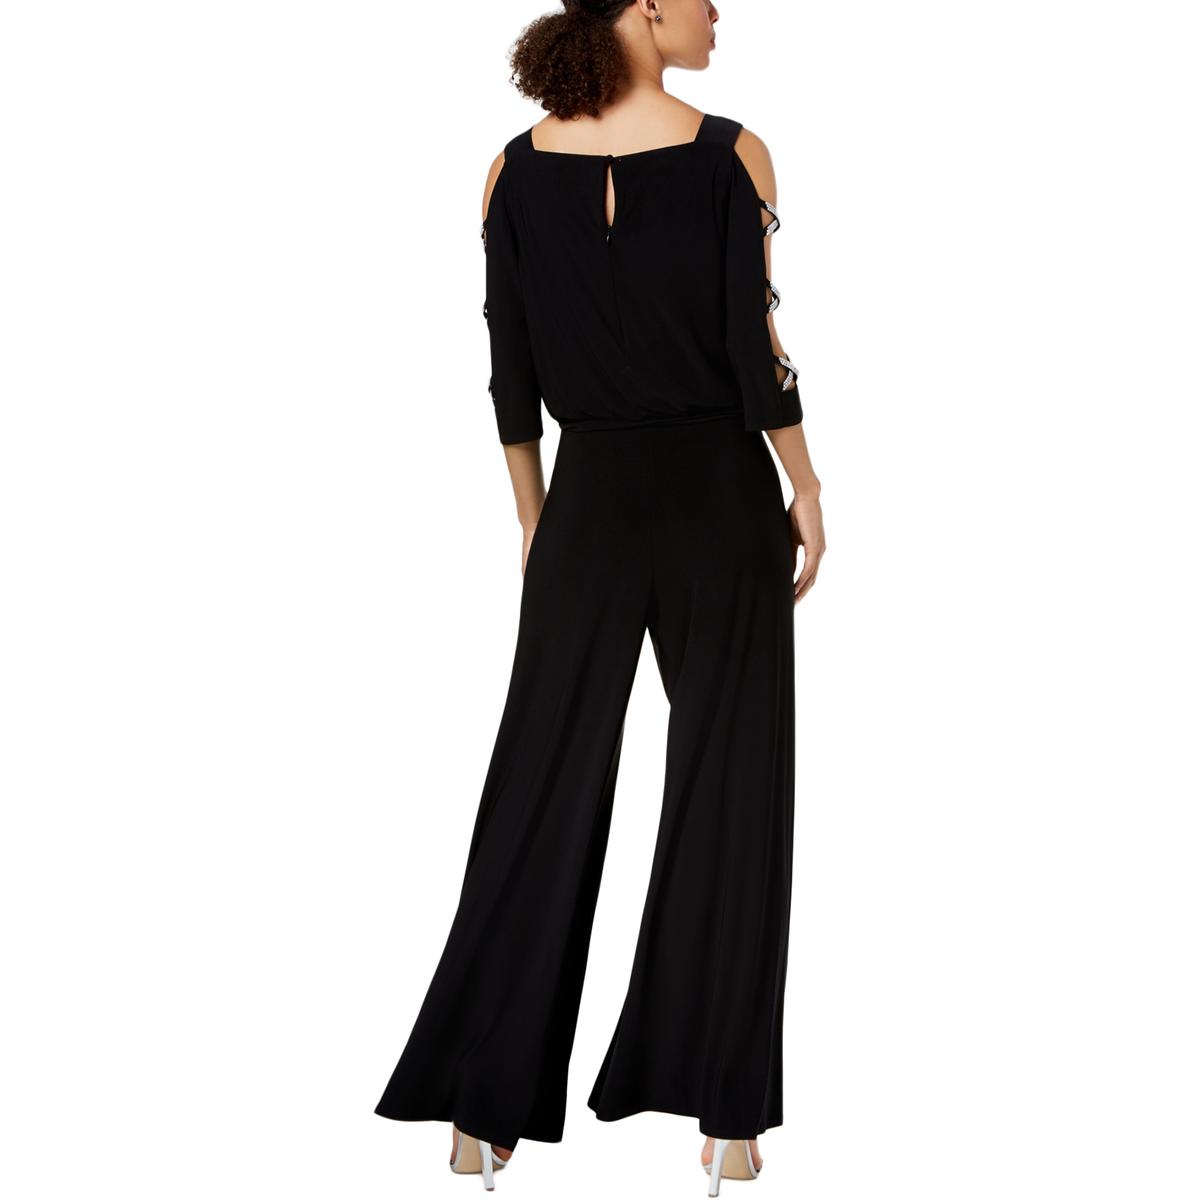 MSK Womens Black Wide Leg Embellished Evening Jumpsuit S BHFO 4885 | eBay